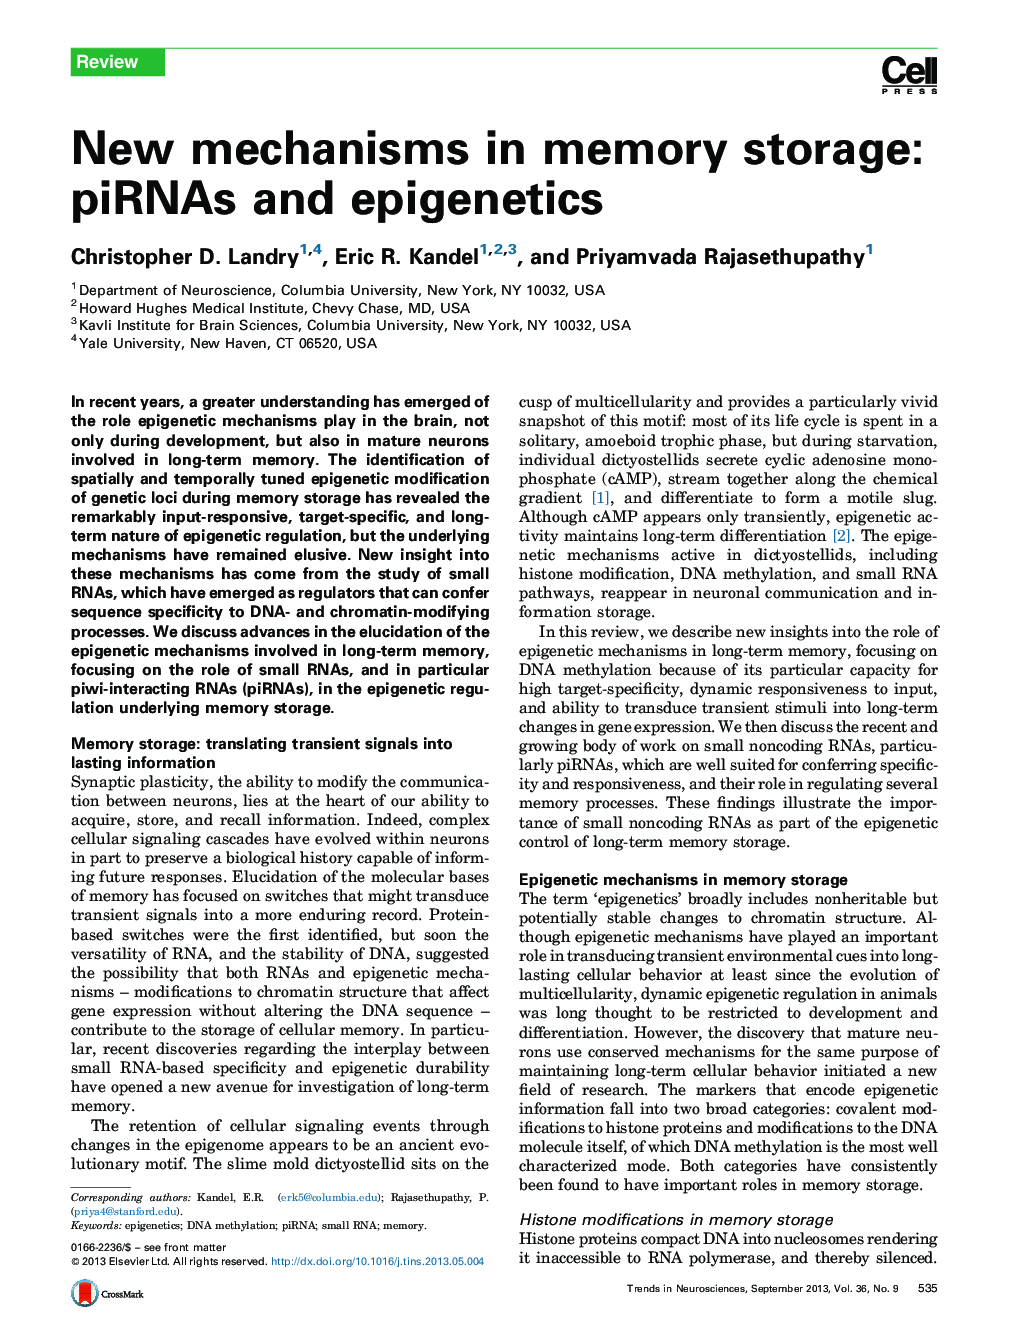 New mechanisms in memory storage: piRNAs and epigenetics